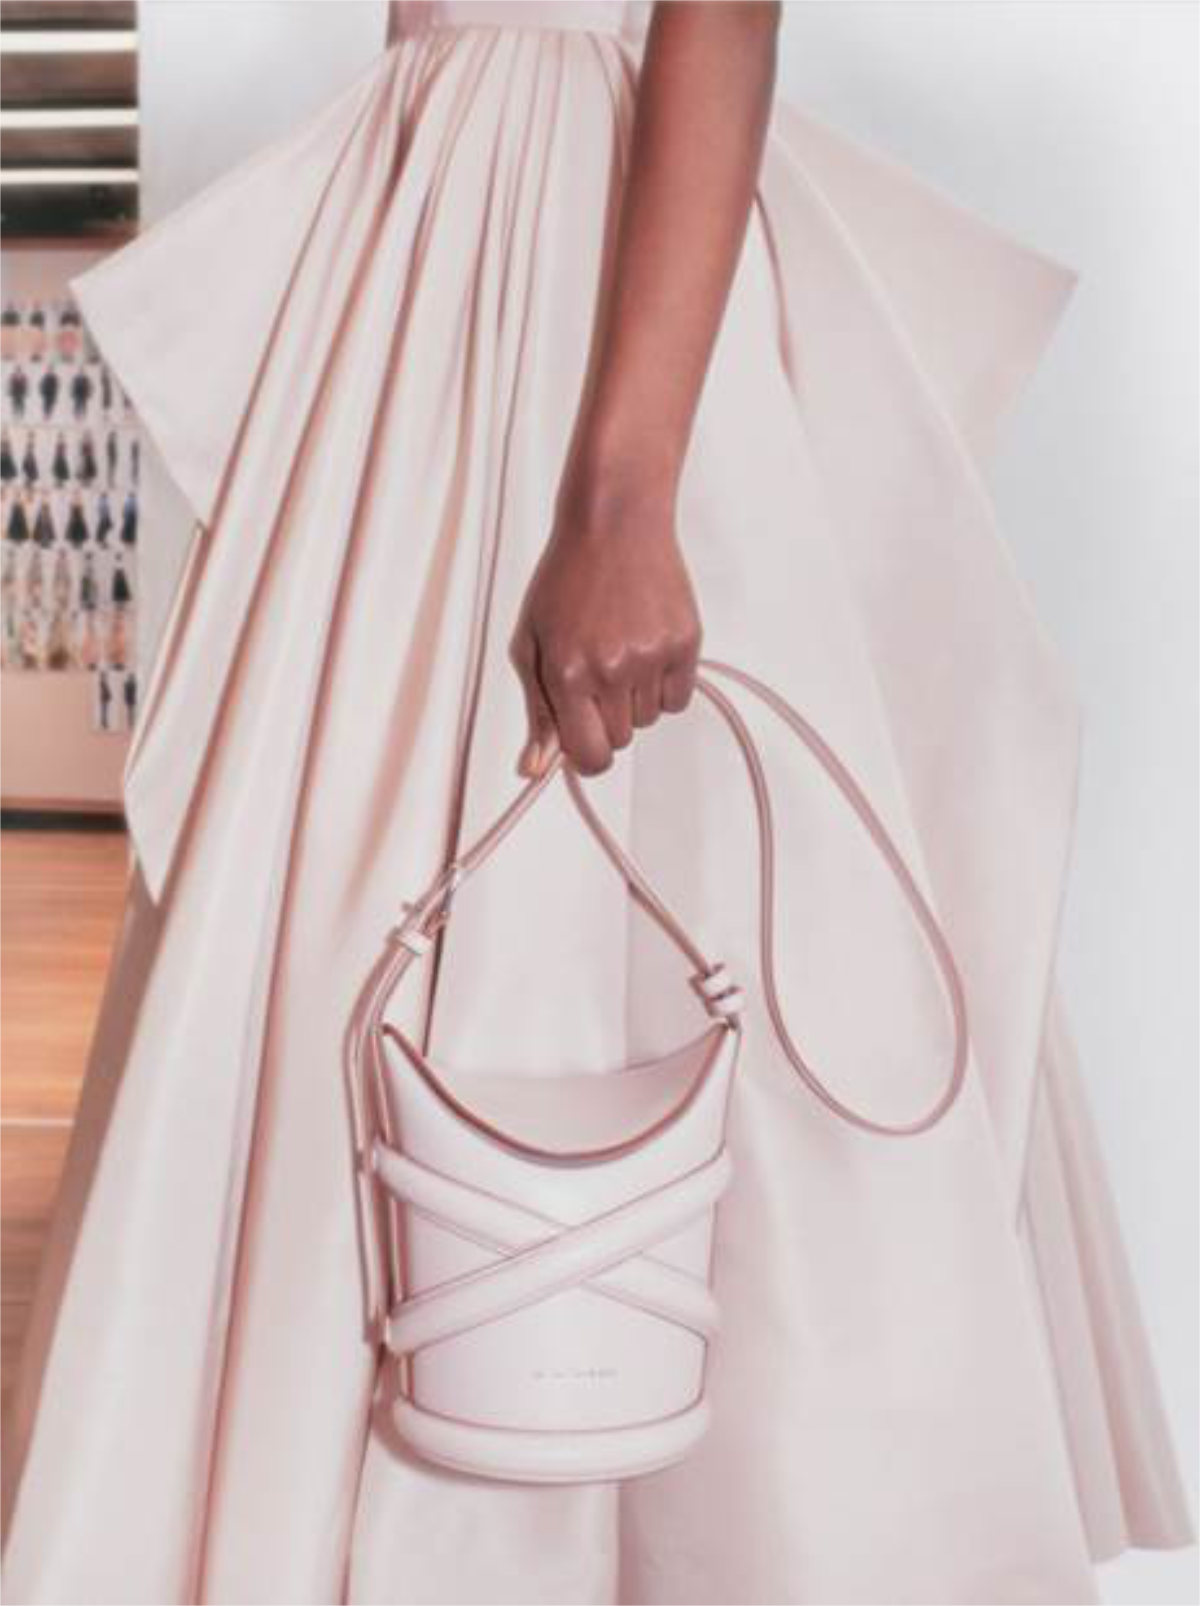 Mon Purse, a New Customizable Bag Concept, Makes Its American Debut | Vogue